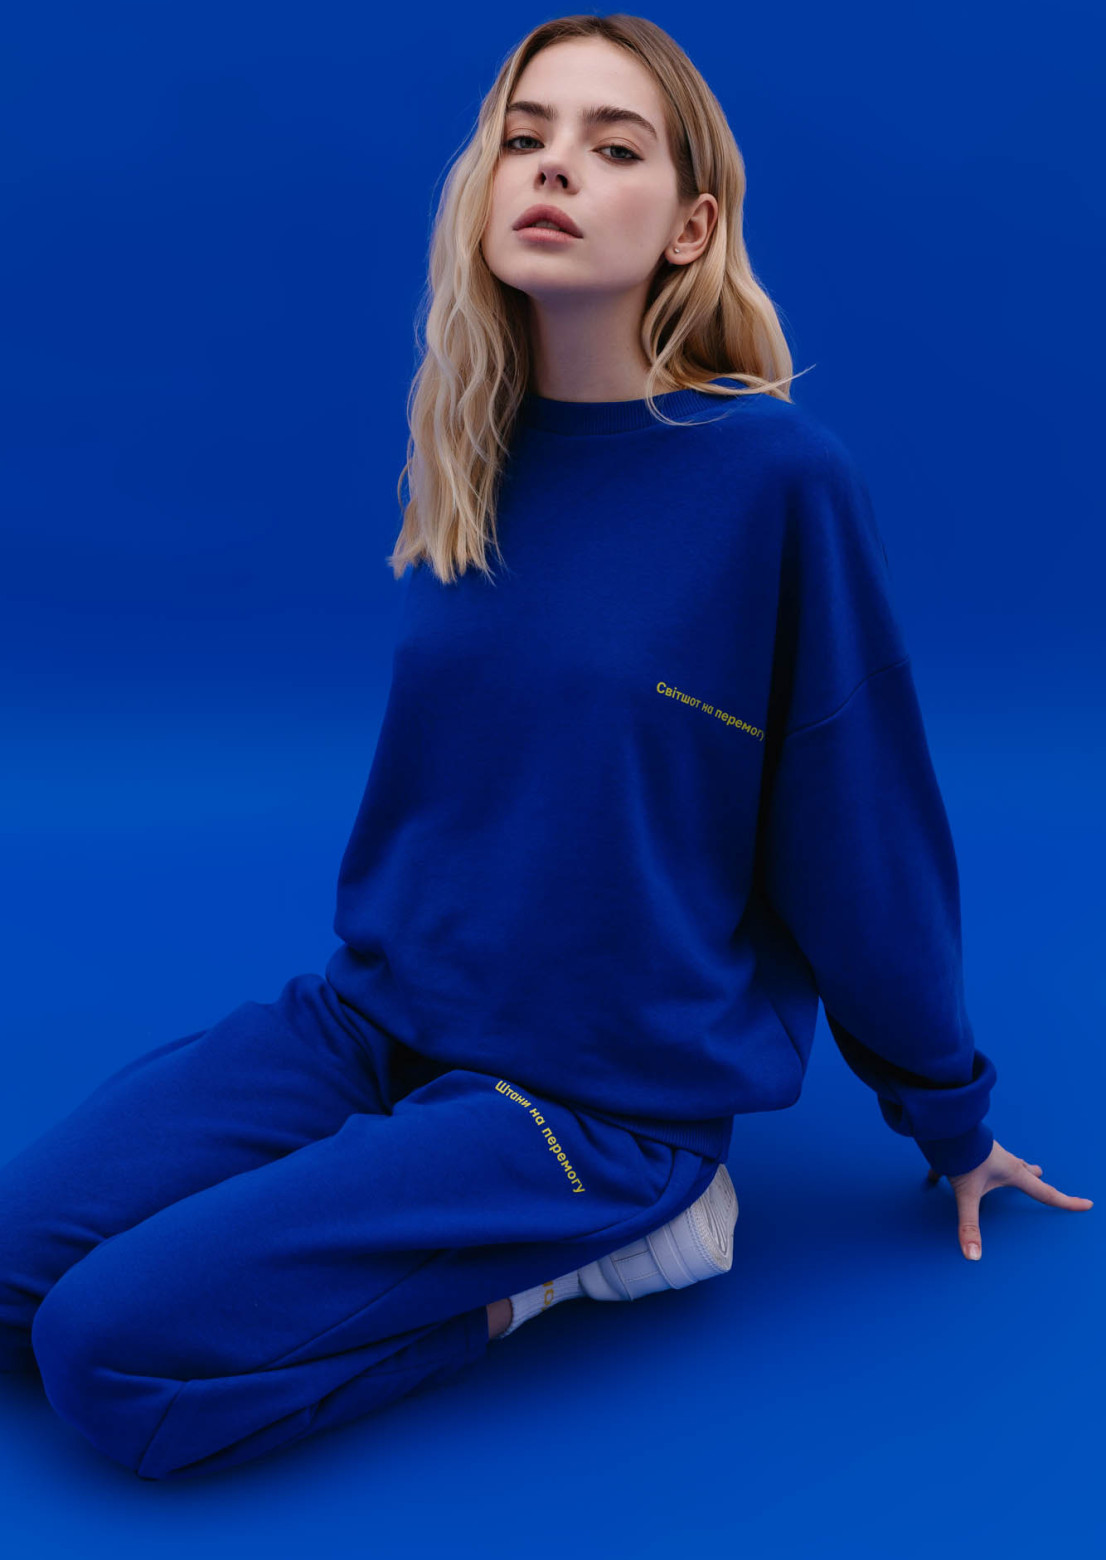 Women's blue color three-thread pleated front trousers "На Перемогу"